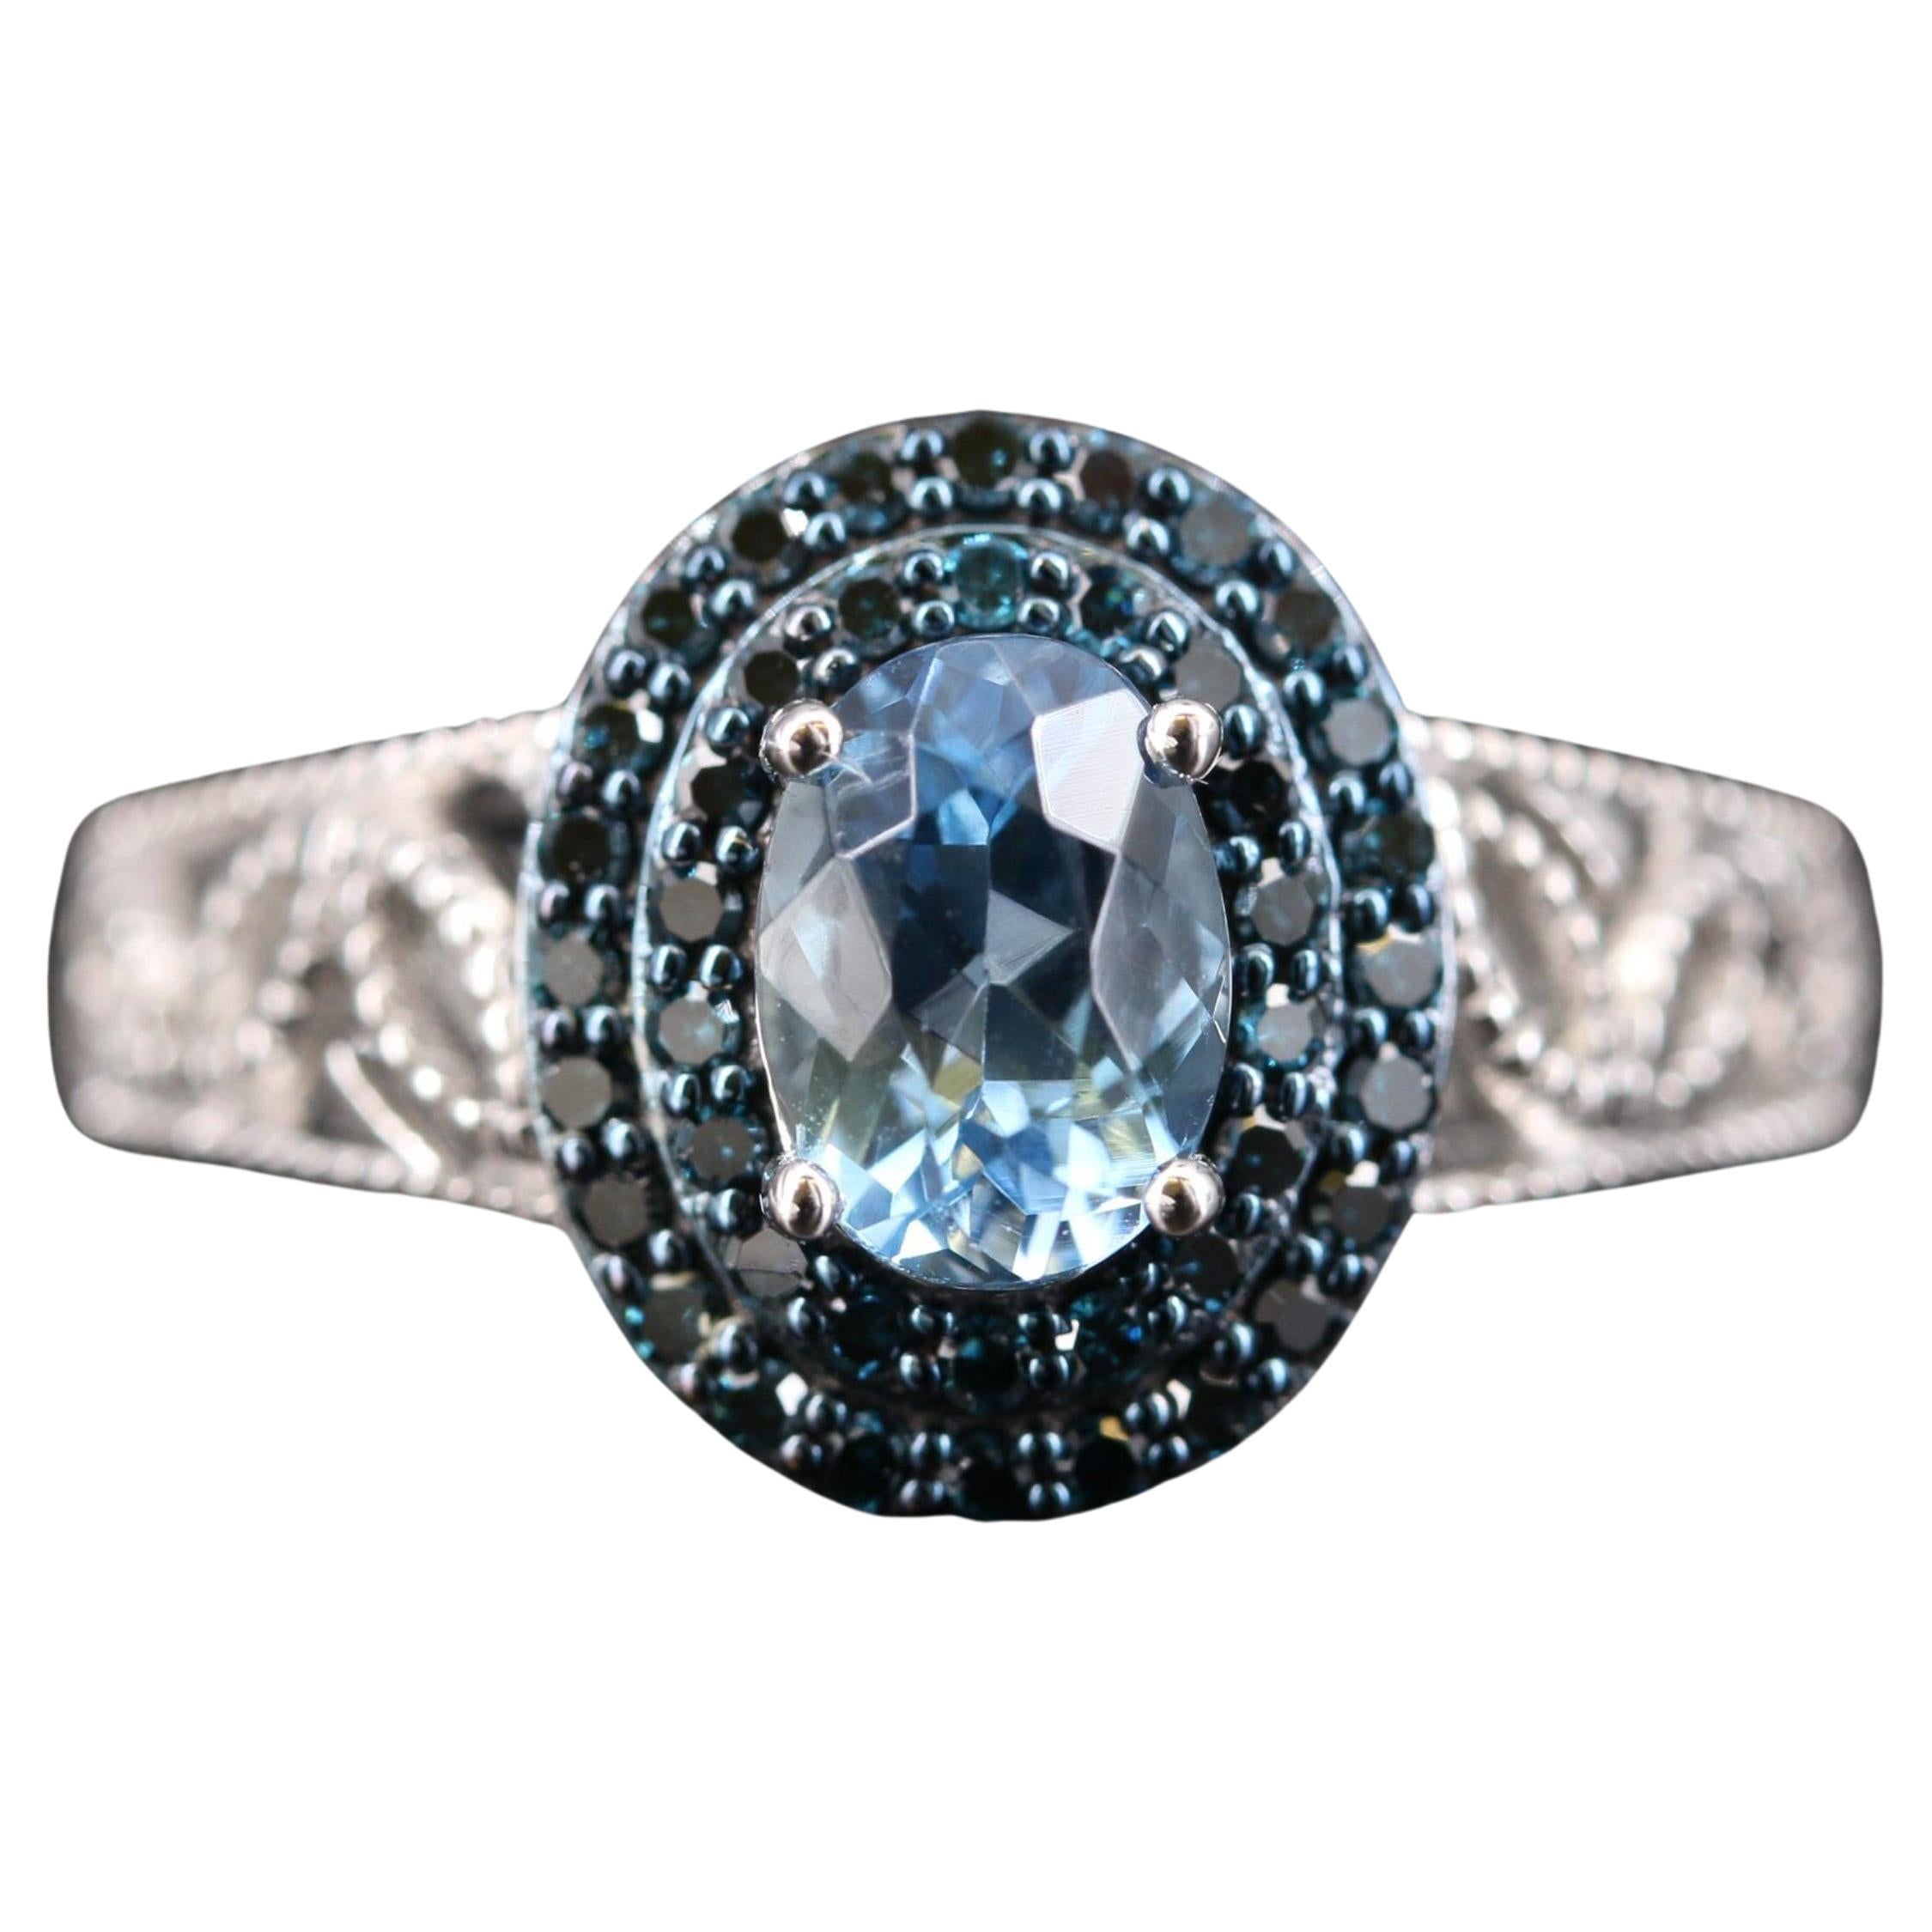 For Sale:  Natural Blue Aquamarine Diamond White Gold Engagement Ring Diamond Cocktail Ring